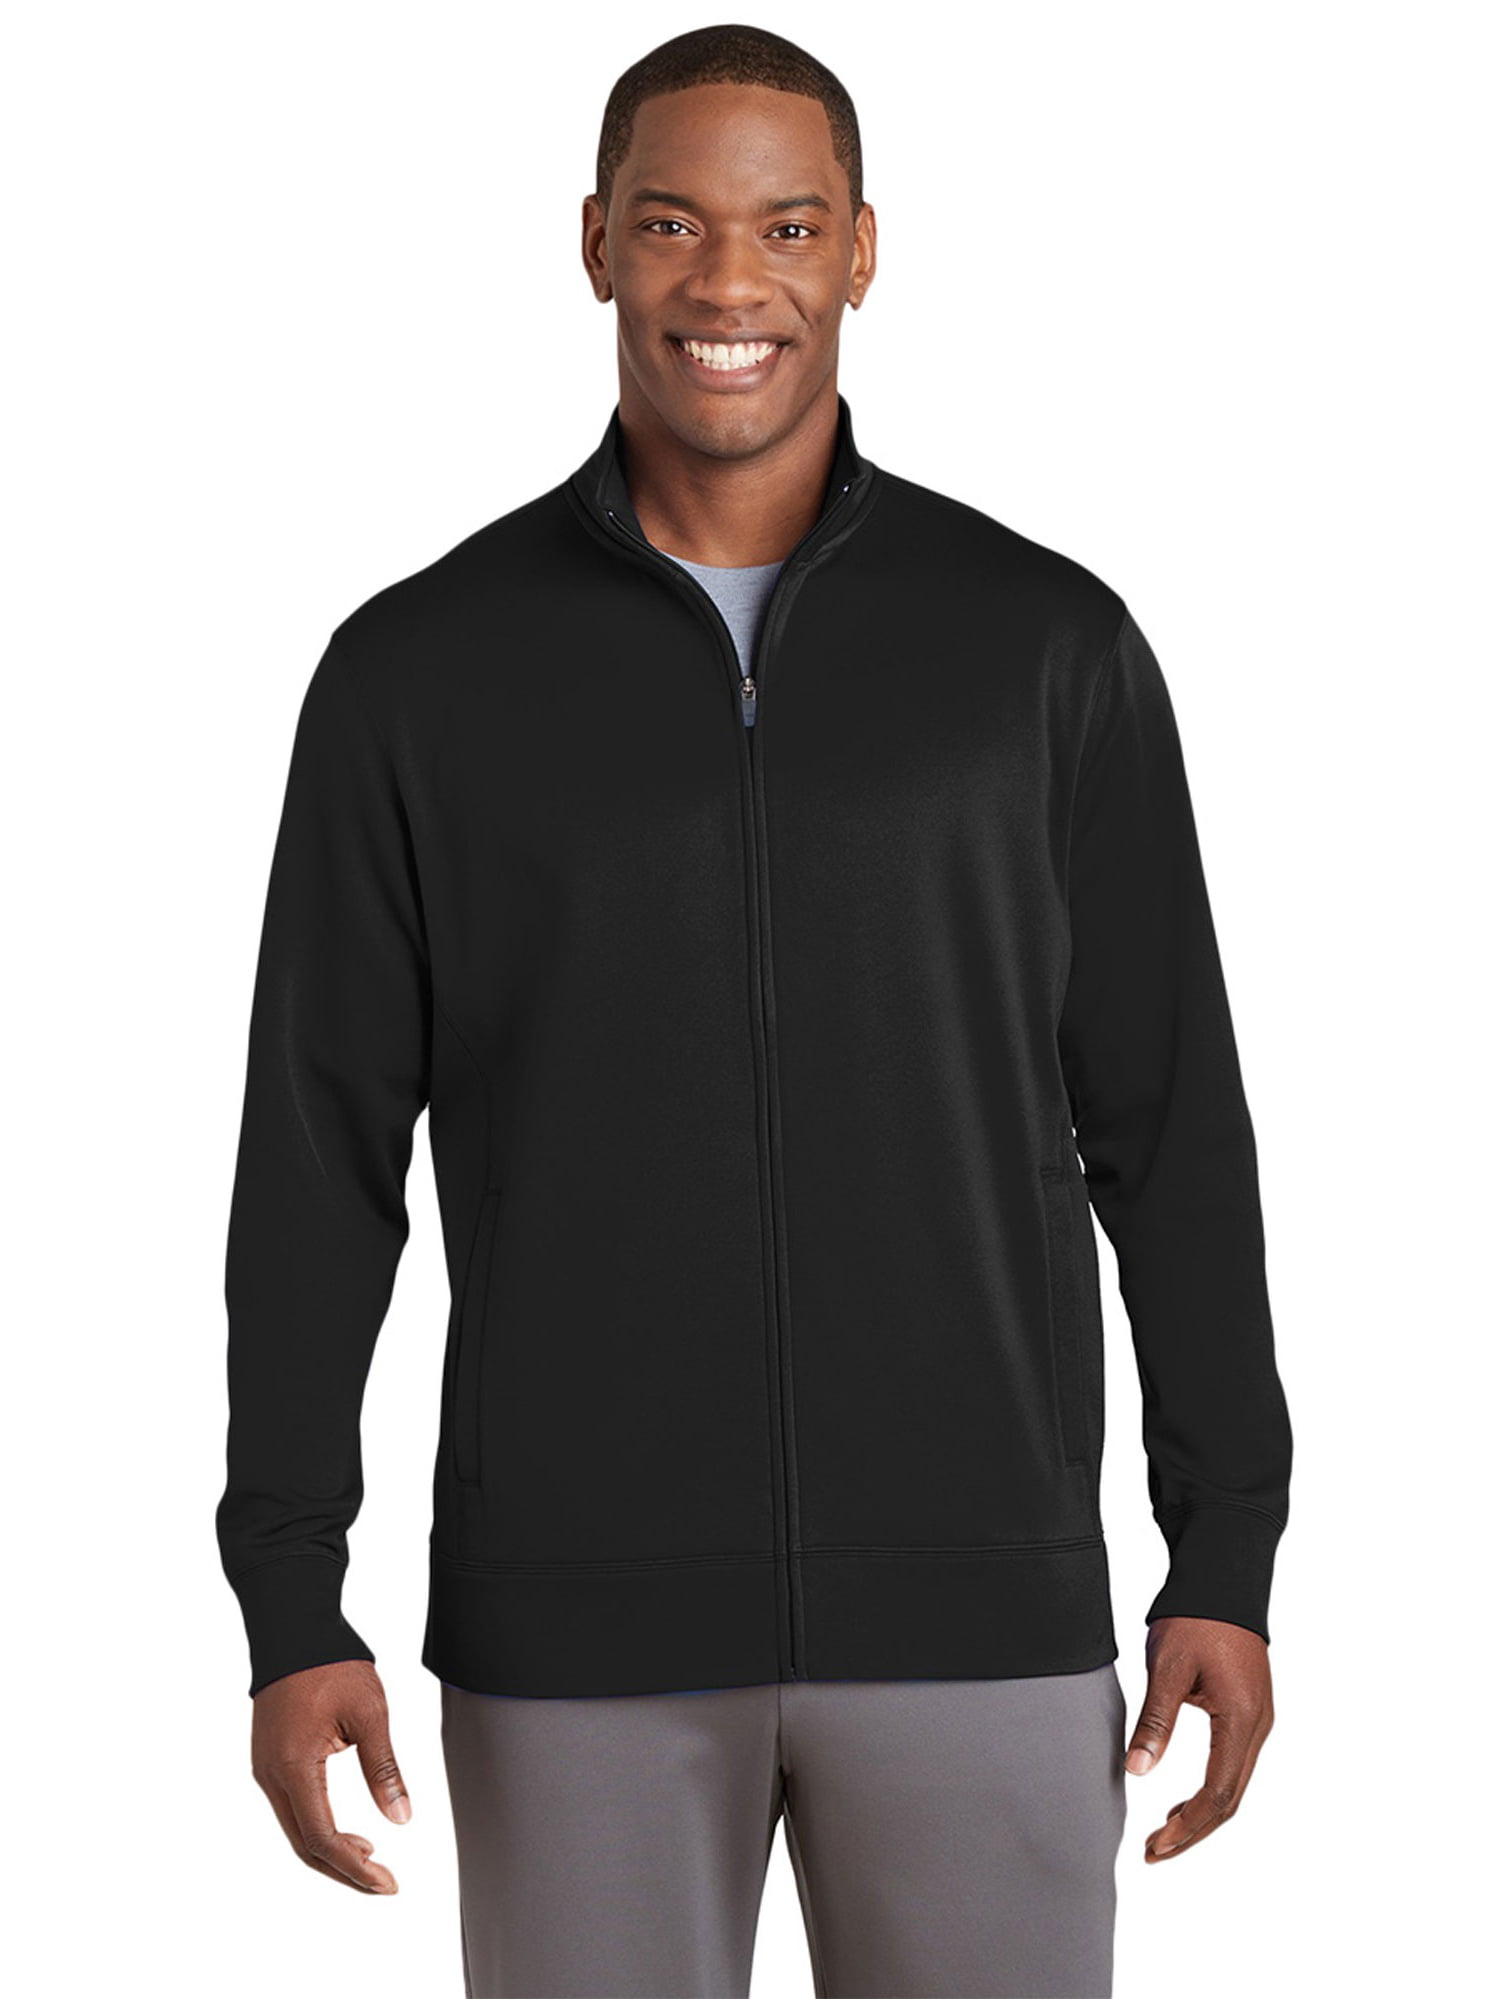 Details about   Attack on Titan Hoodie Warm Jacket Sports Sweatshirt Full-Zip Coat Spring hooded 